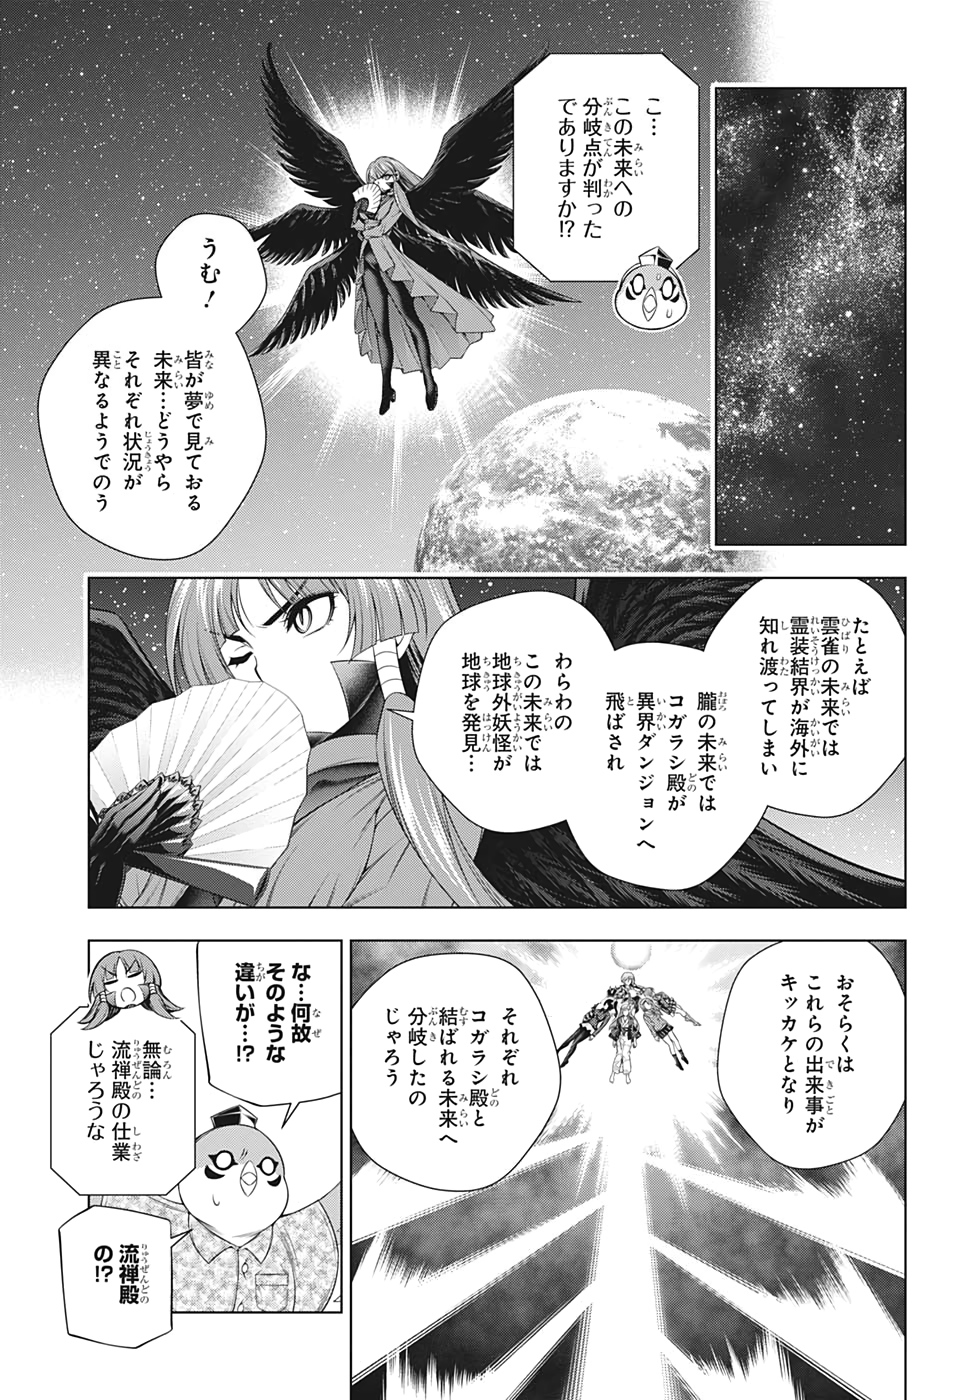 Yuragi-sou no Yuuna-san - ゆらぎ荘の幽奈さん - Chapter 202 - Page 3